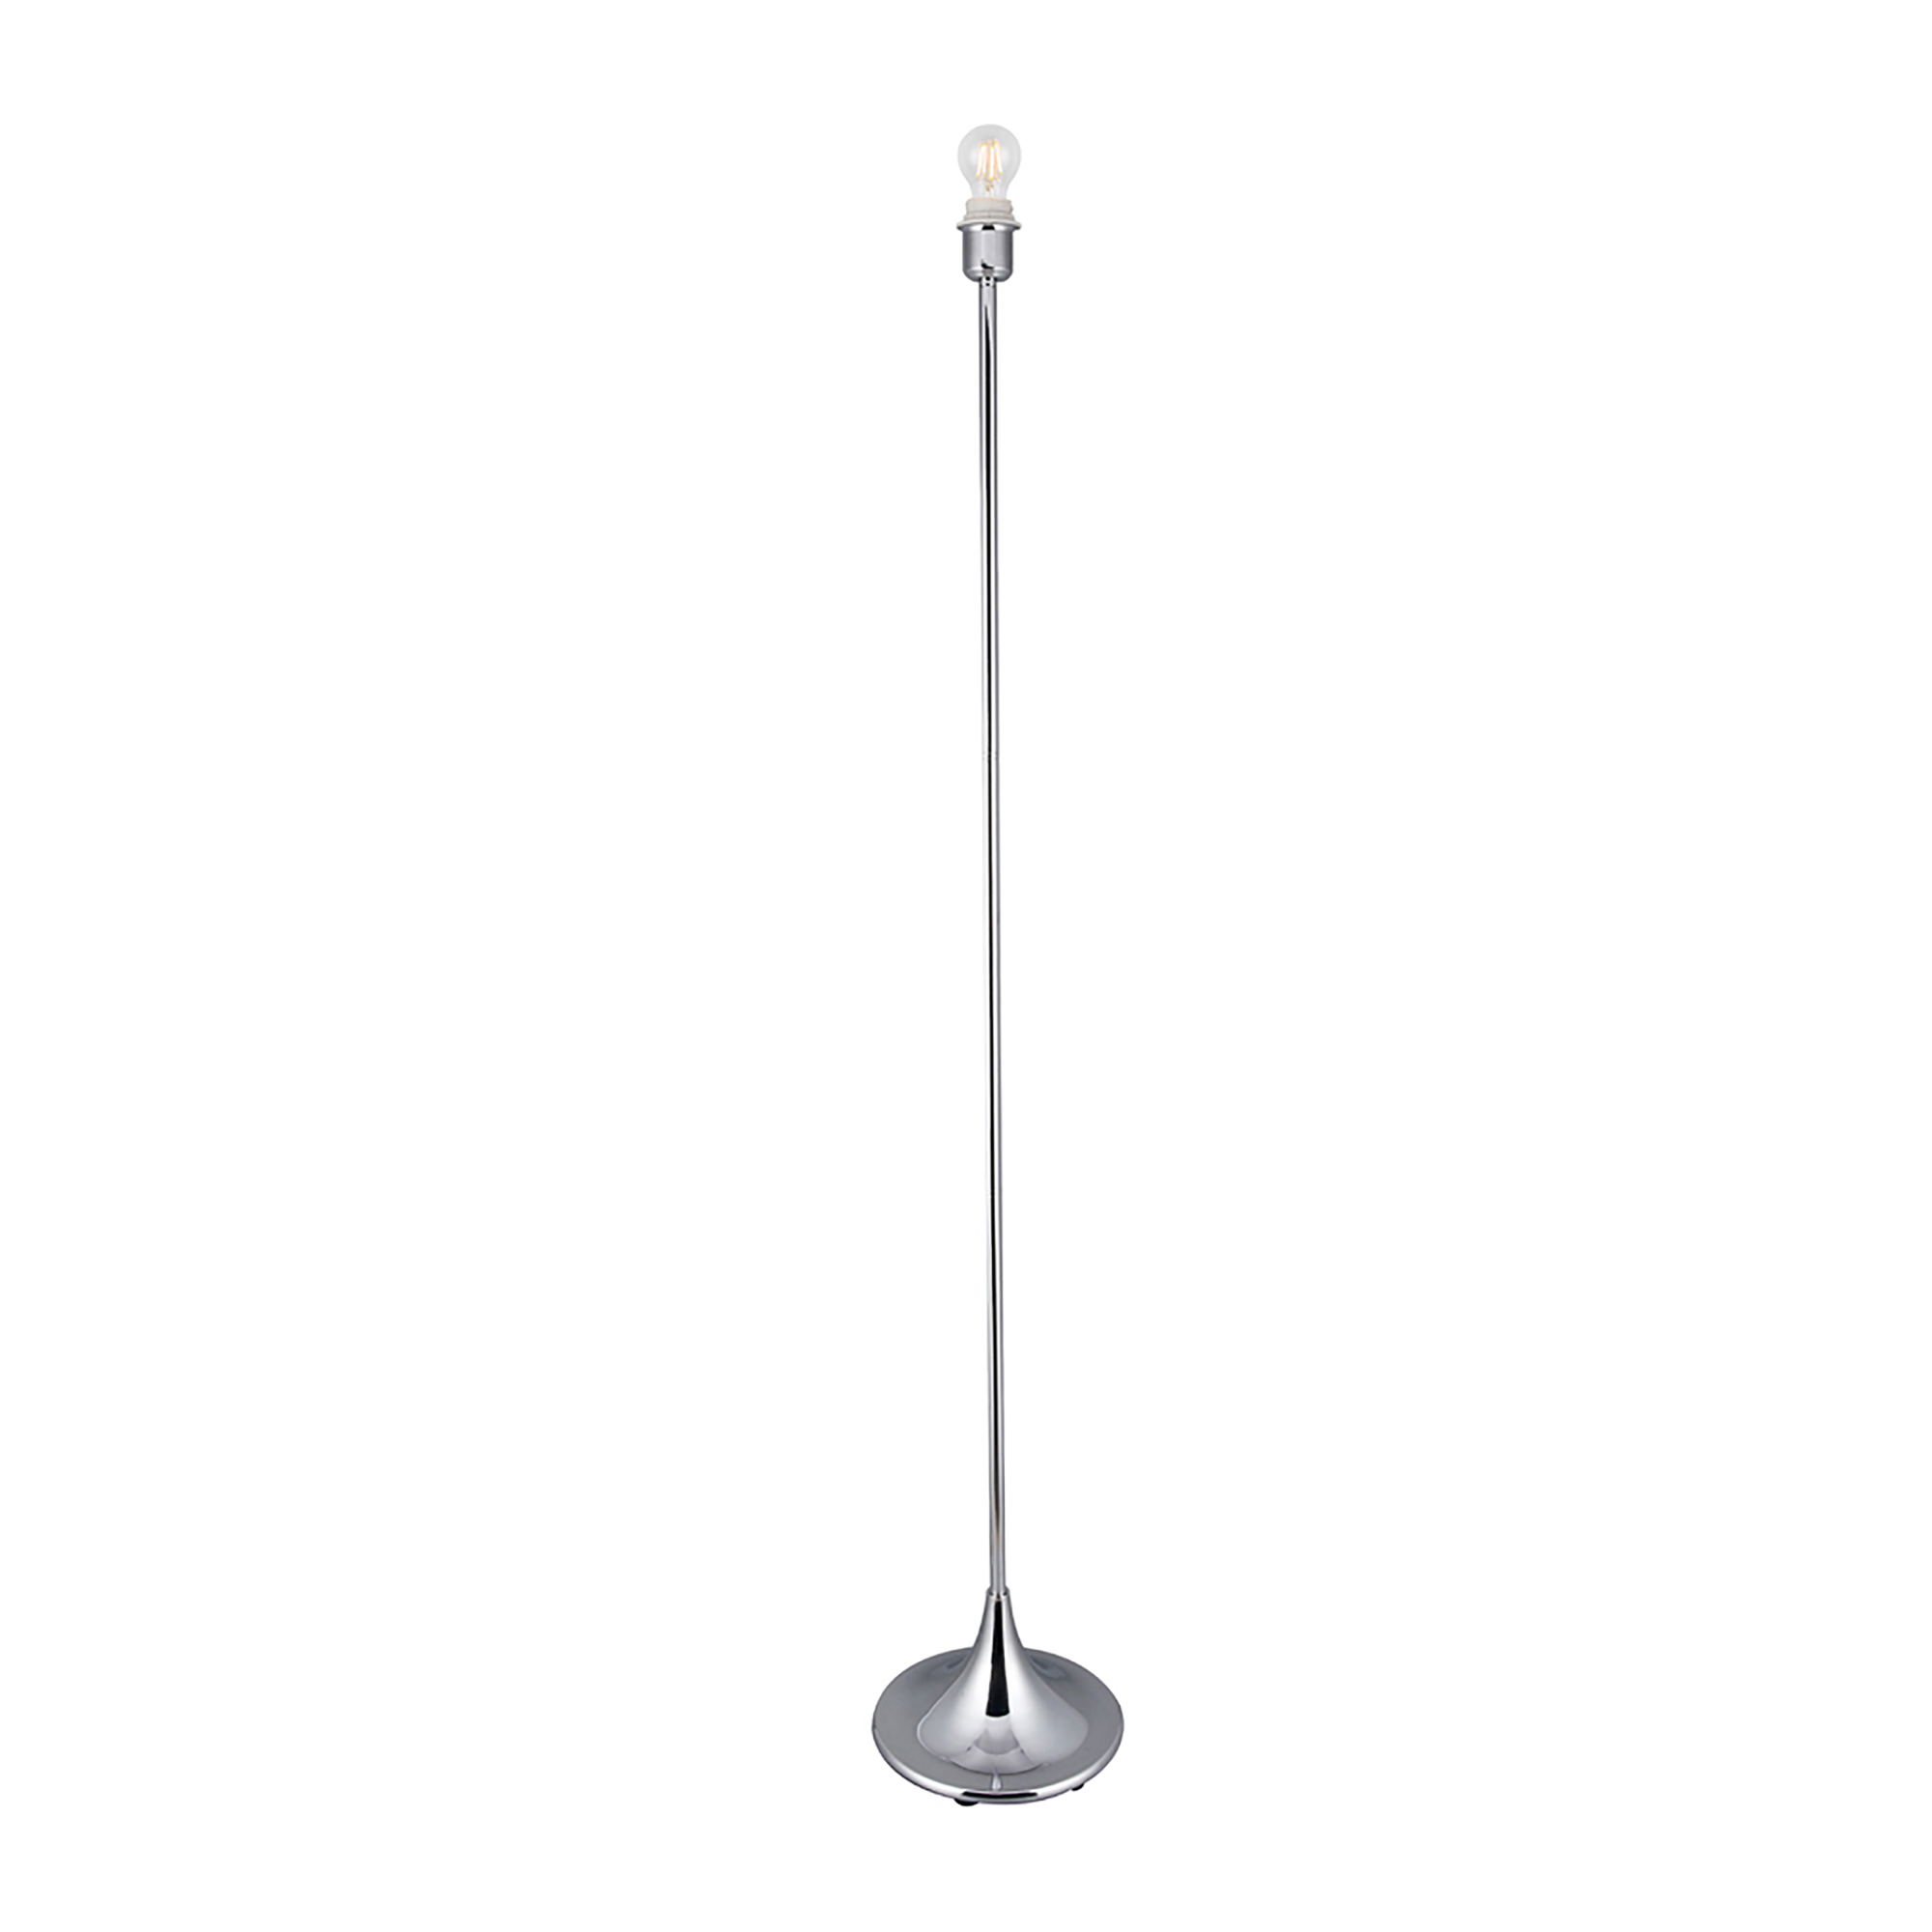 D0351  Crowne 145cm Floor Lamp 1 Light Polished Chrome